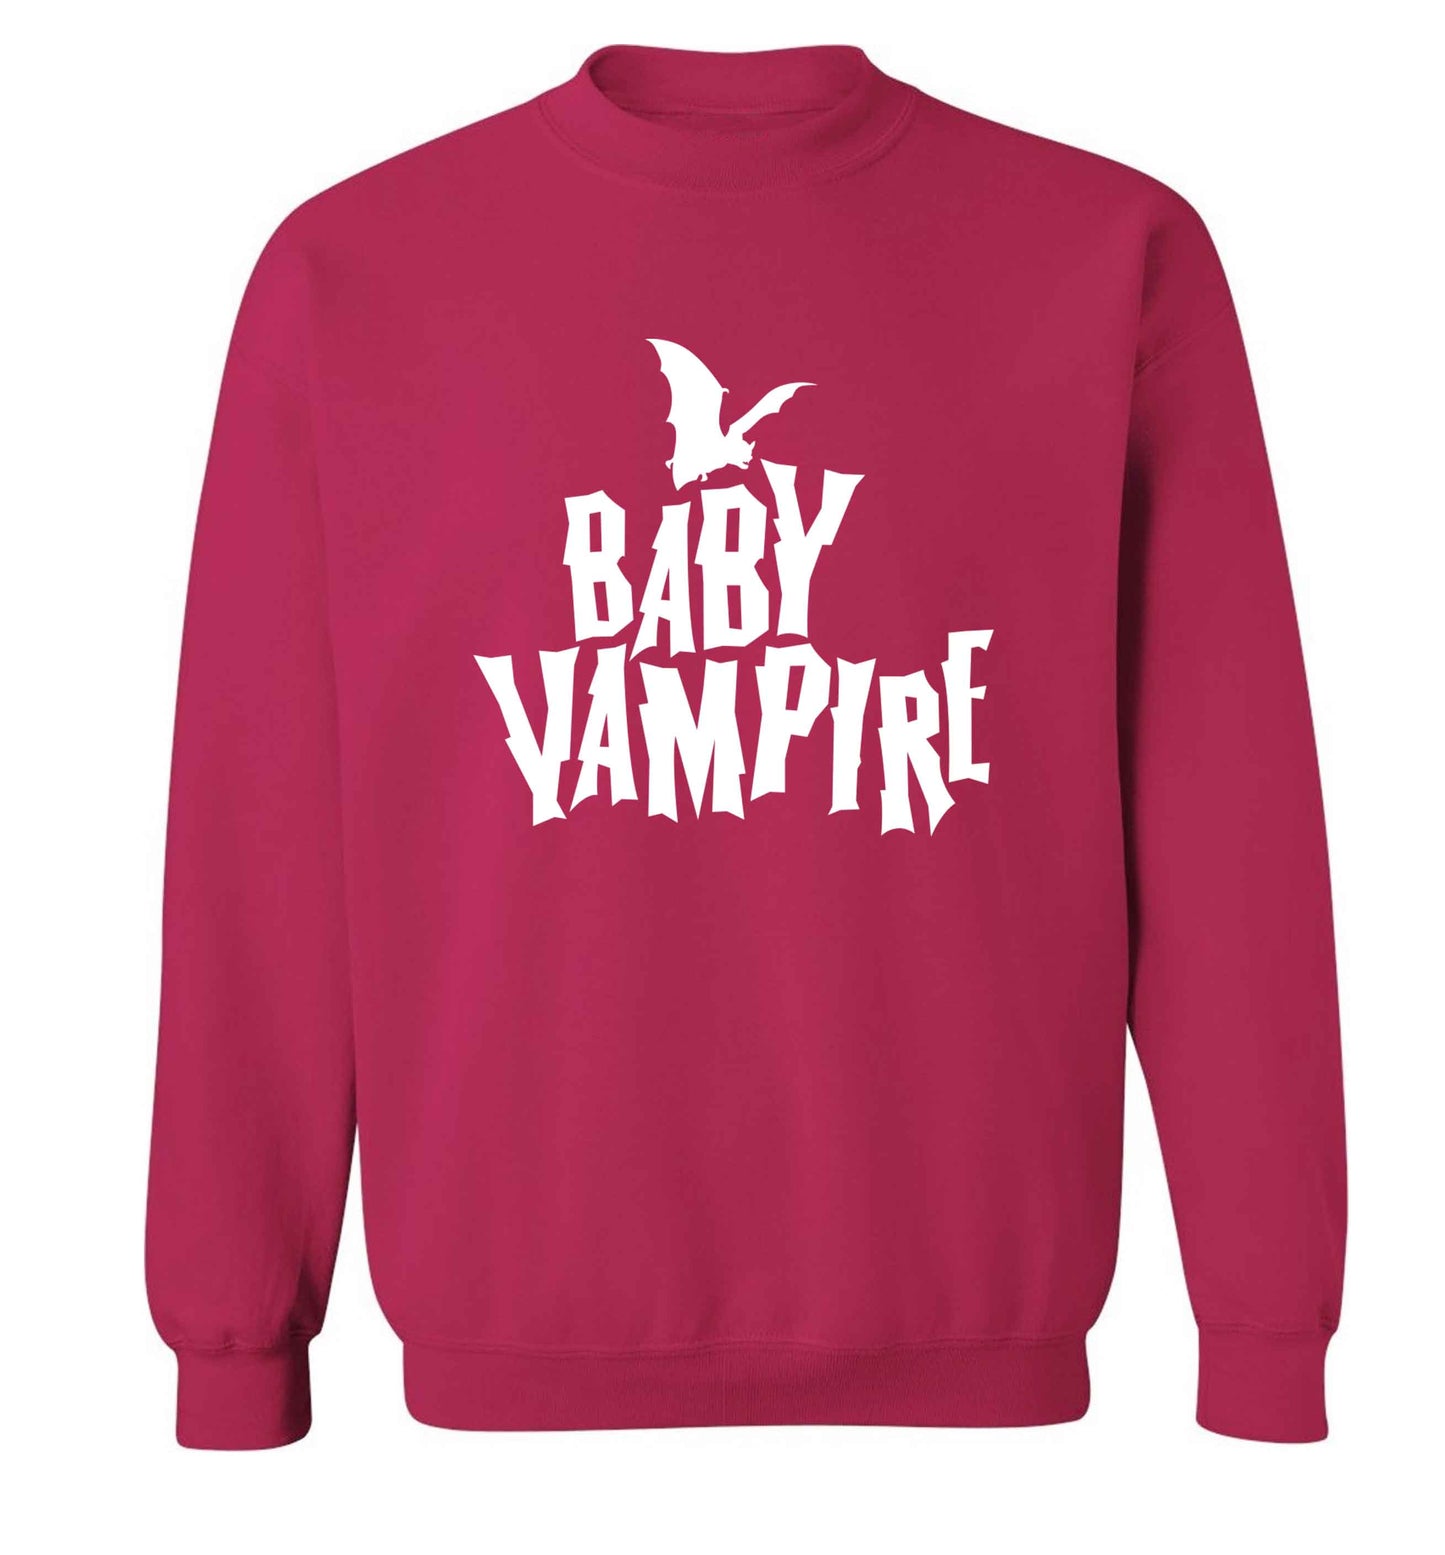 Baby vampire adult's unisex pink sweater 2XL